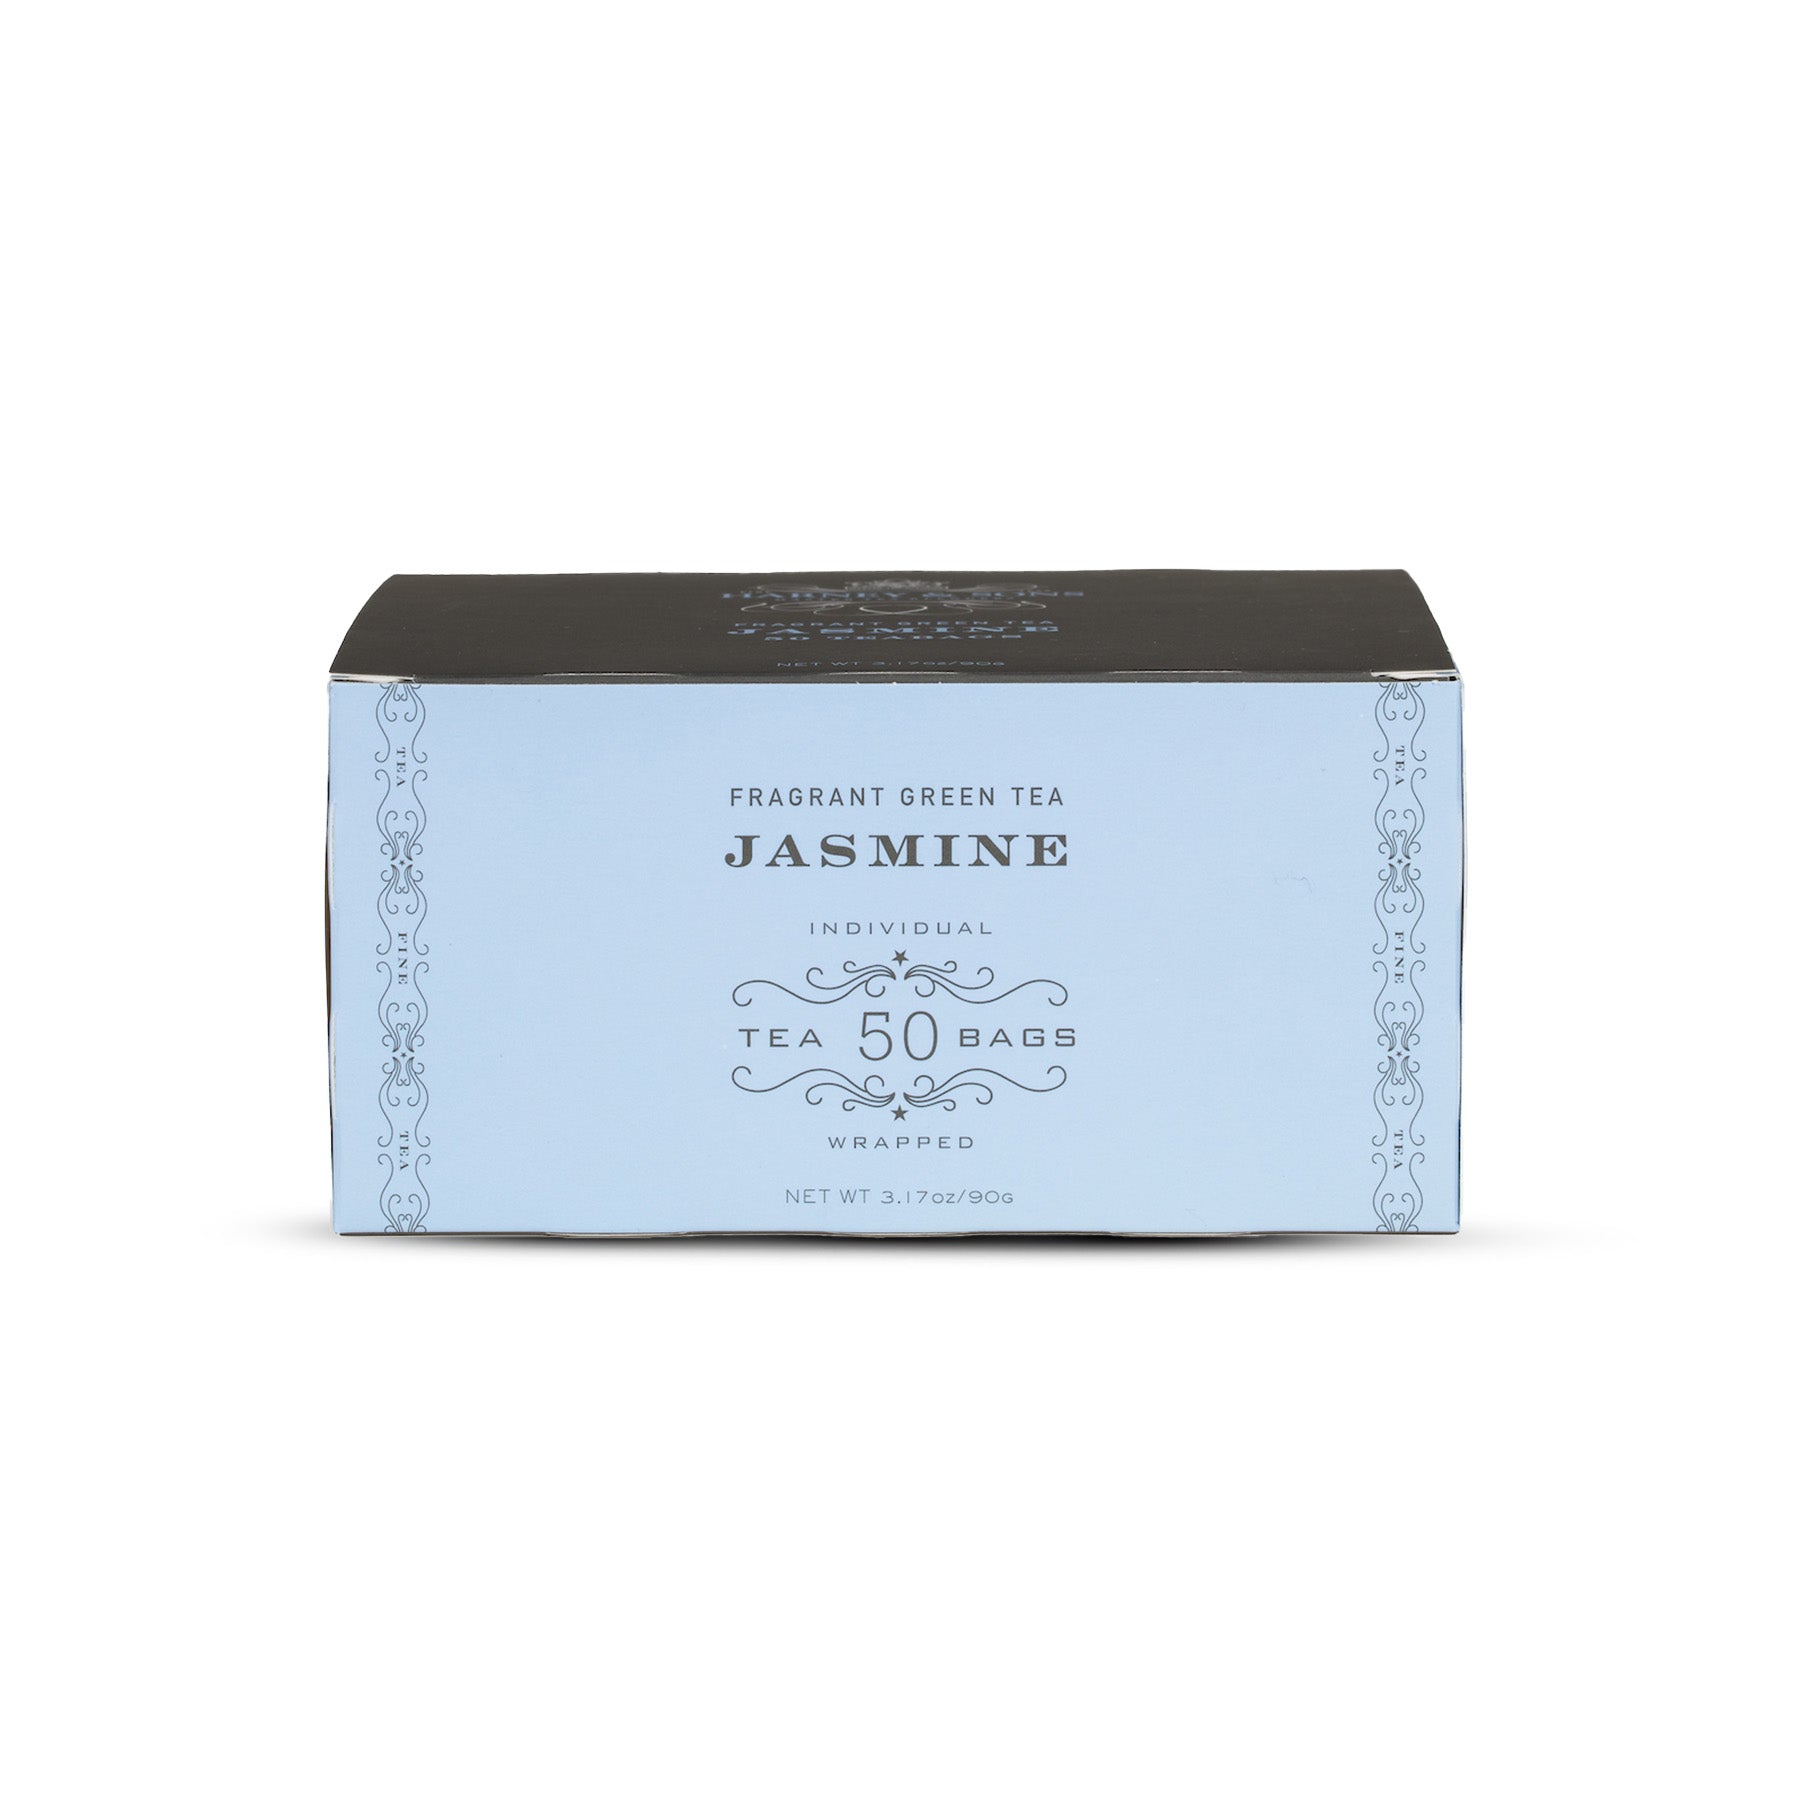 Jasmine Tea - Teabags 50 CT Foil Wrapped Teabags - Harney & Sons Fine Teas Europe